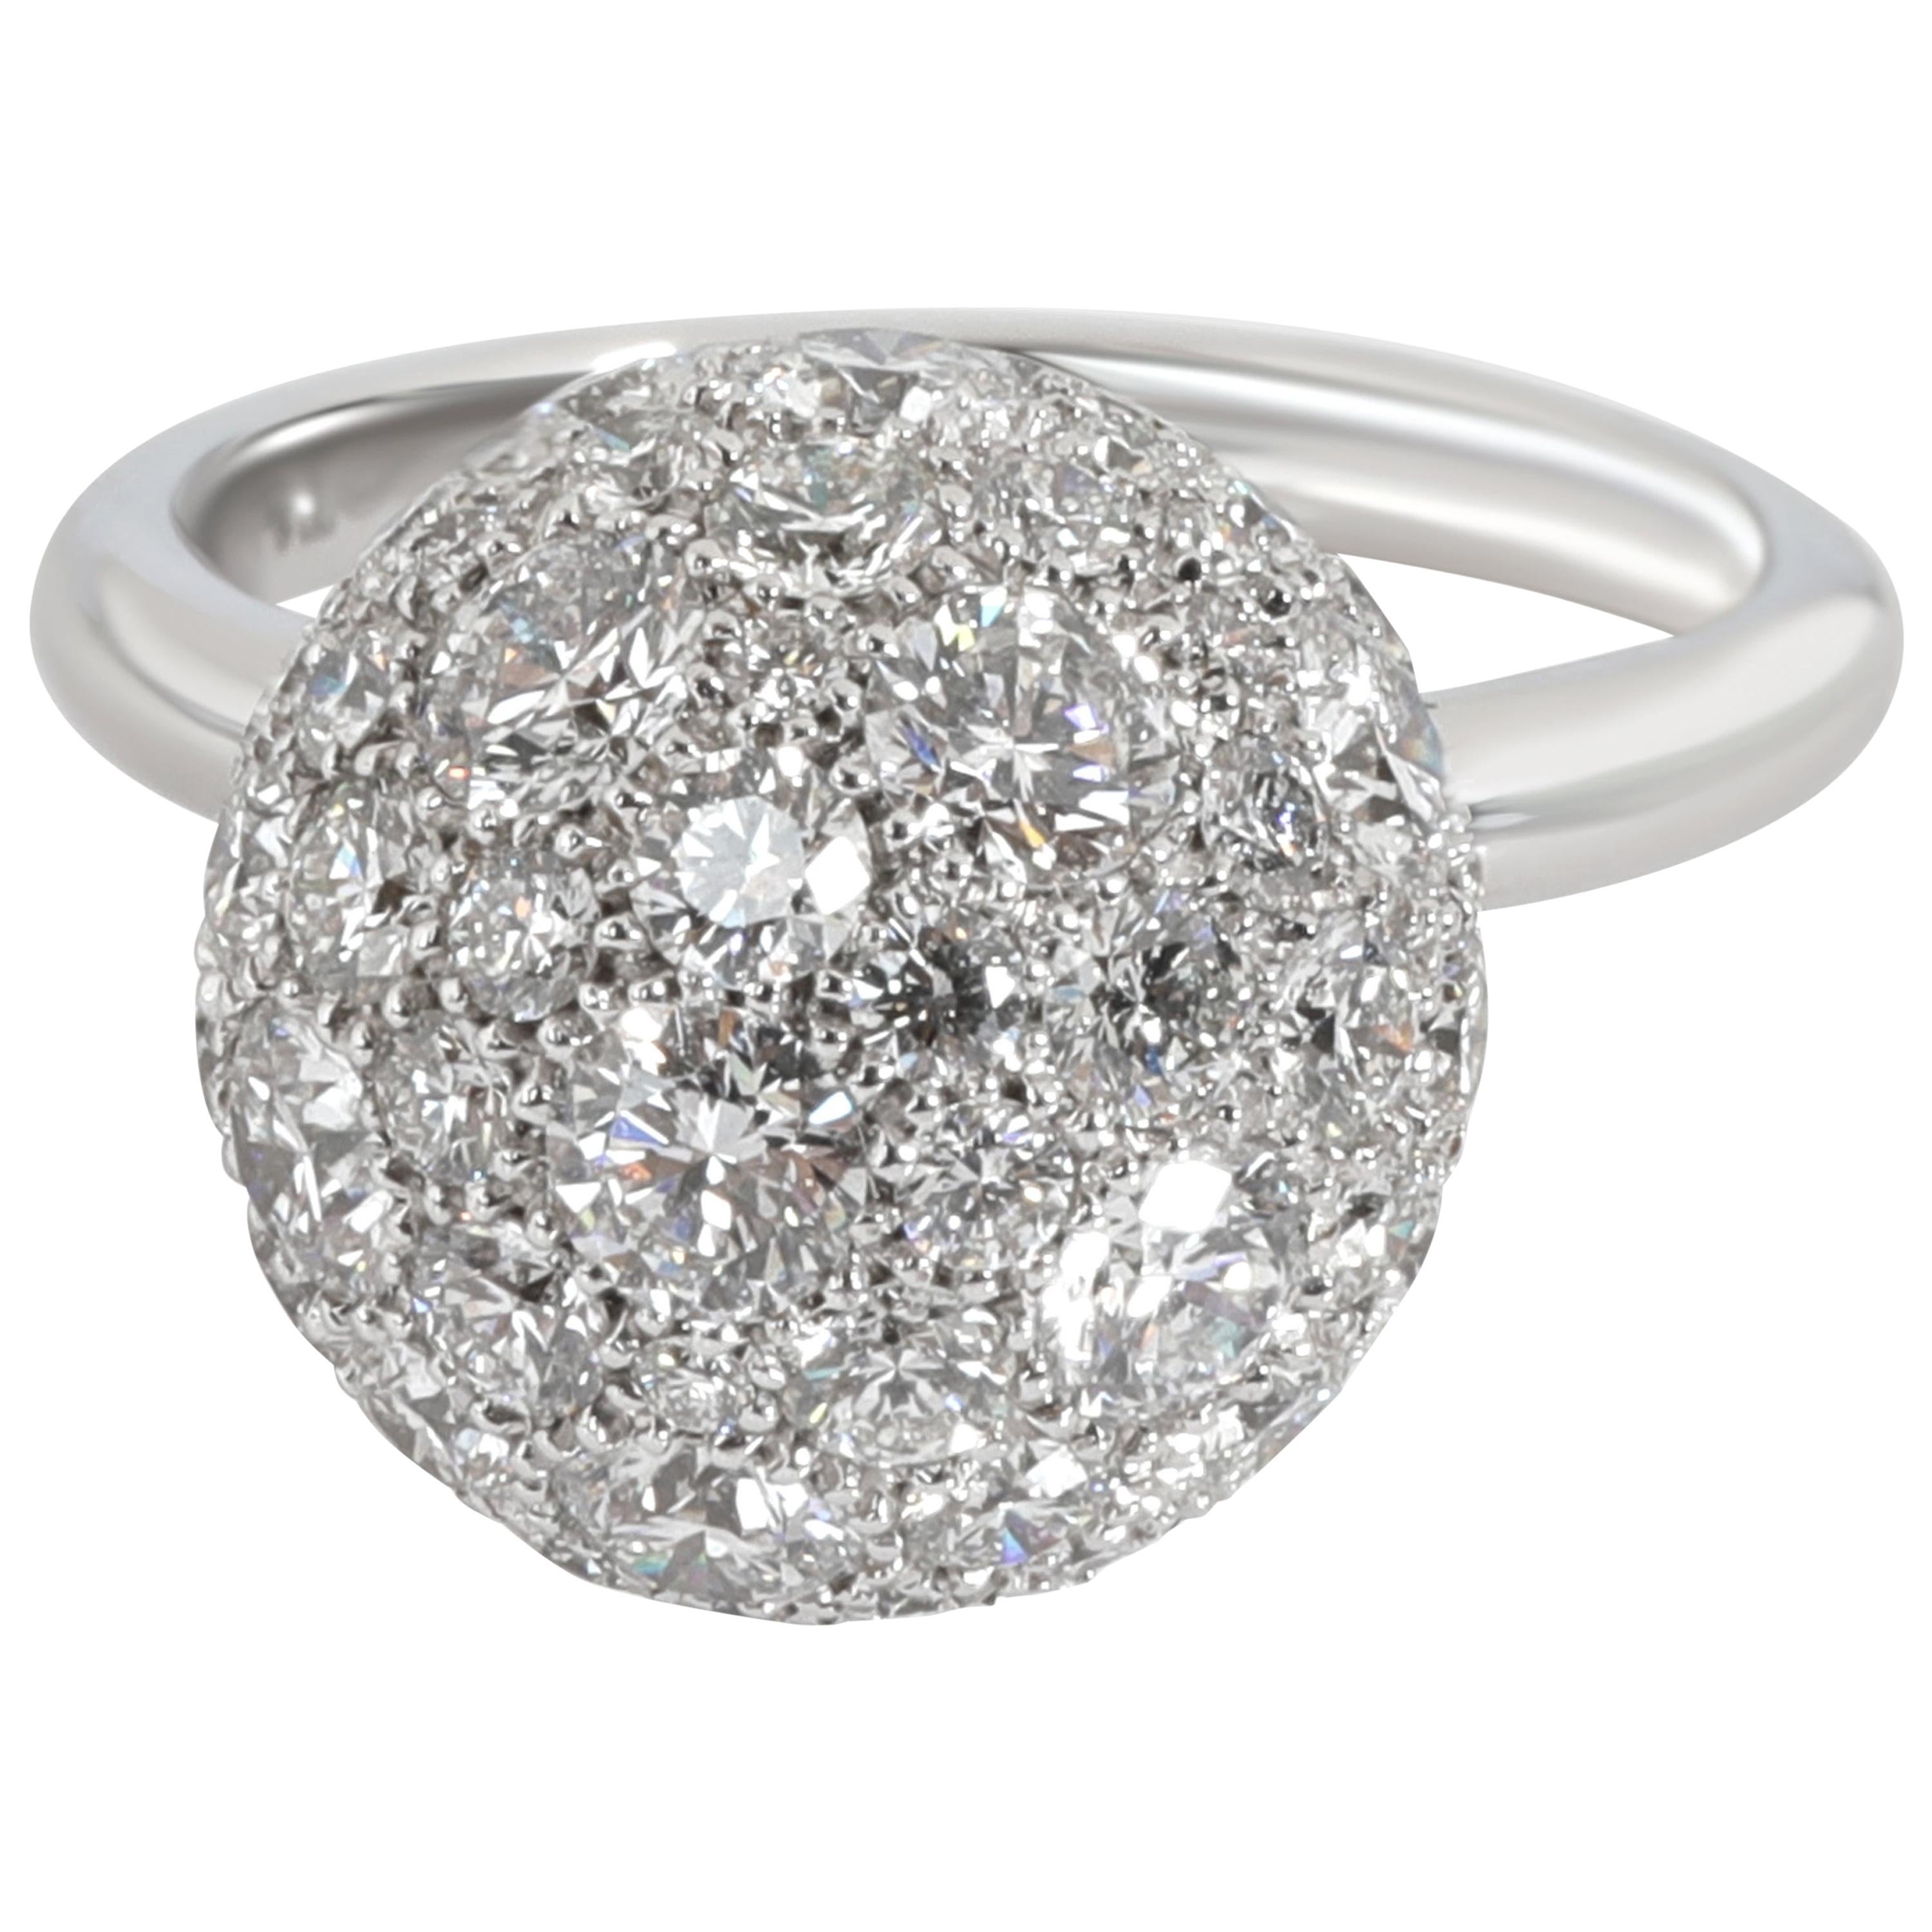 Tiffany & Co. Hardwear Diamond Ball Ring in 18 Karat White Gold 2.99 Carat